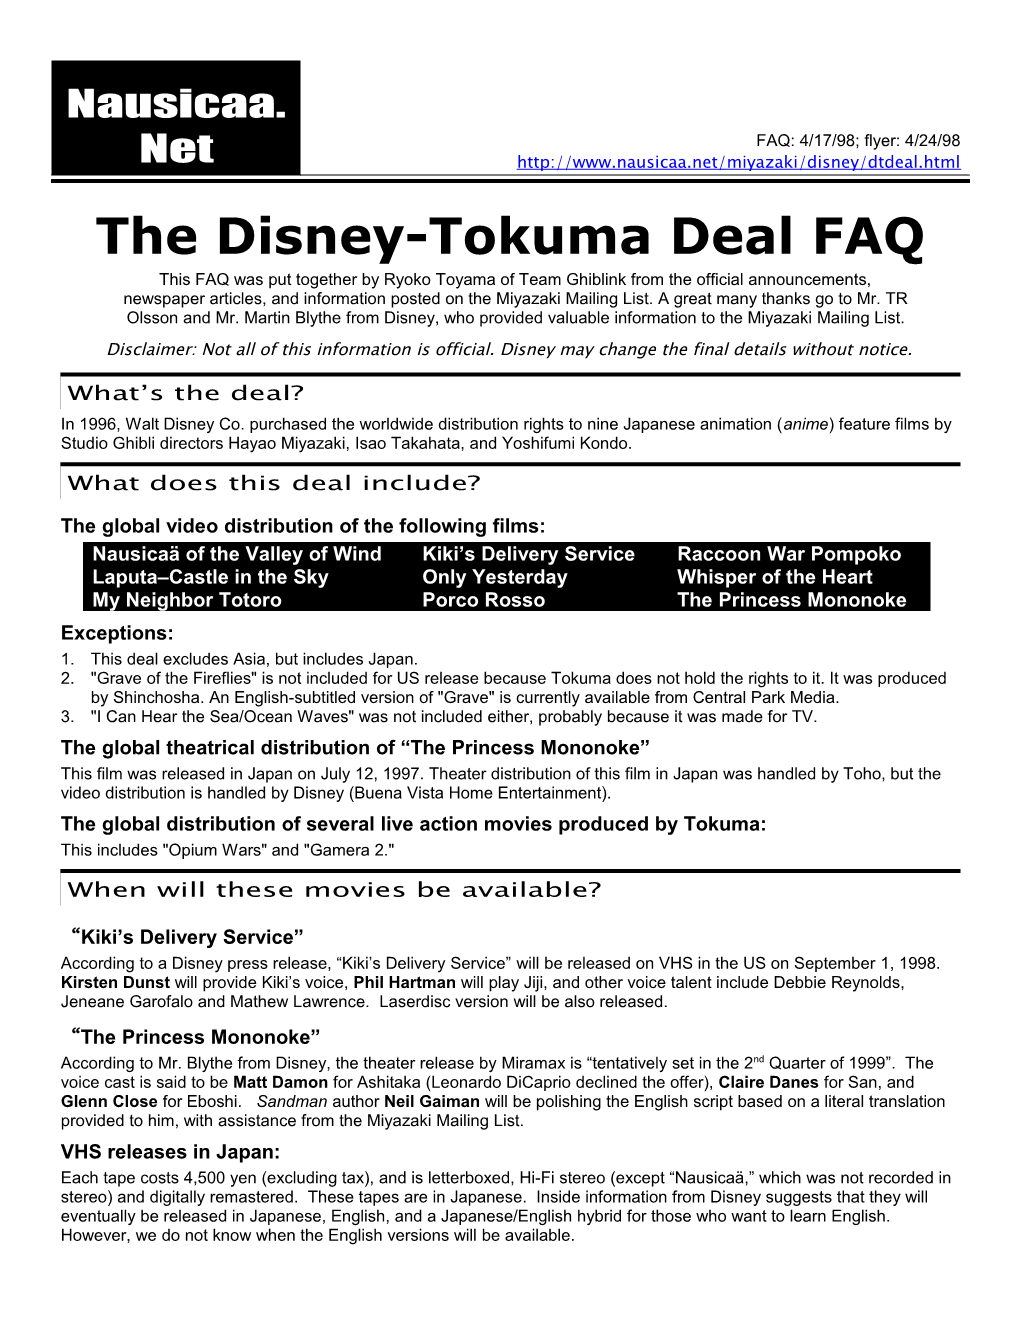 Disney-Tokuma Deal FAQ